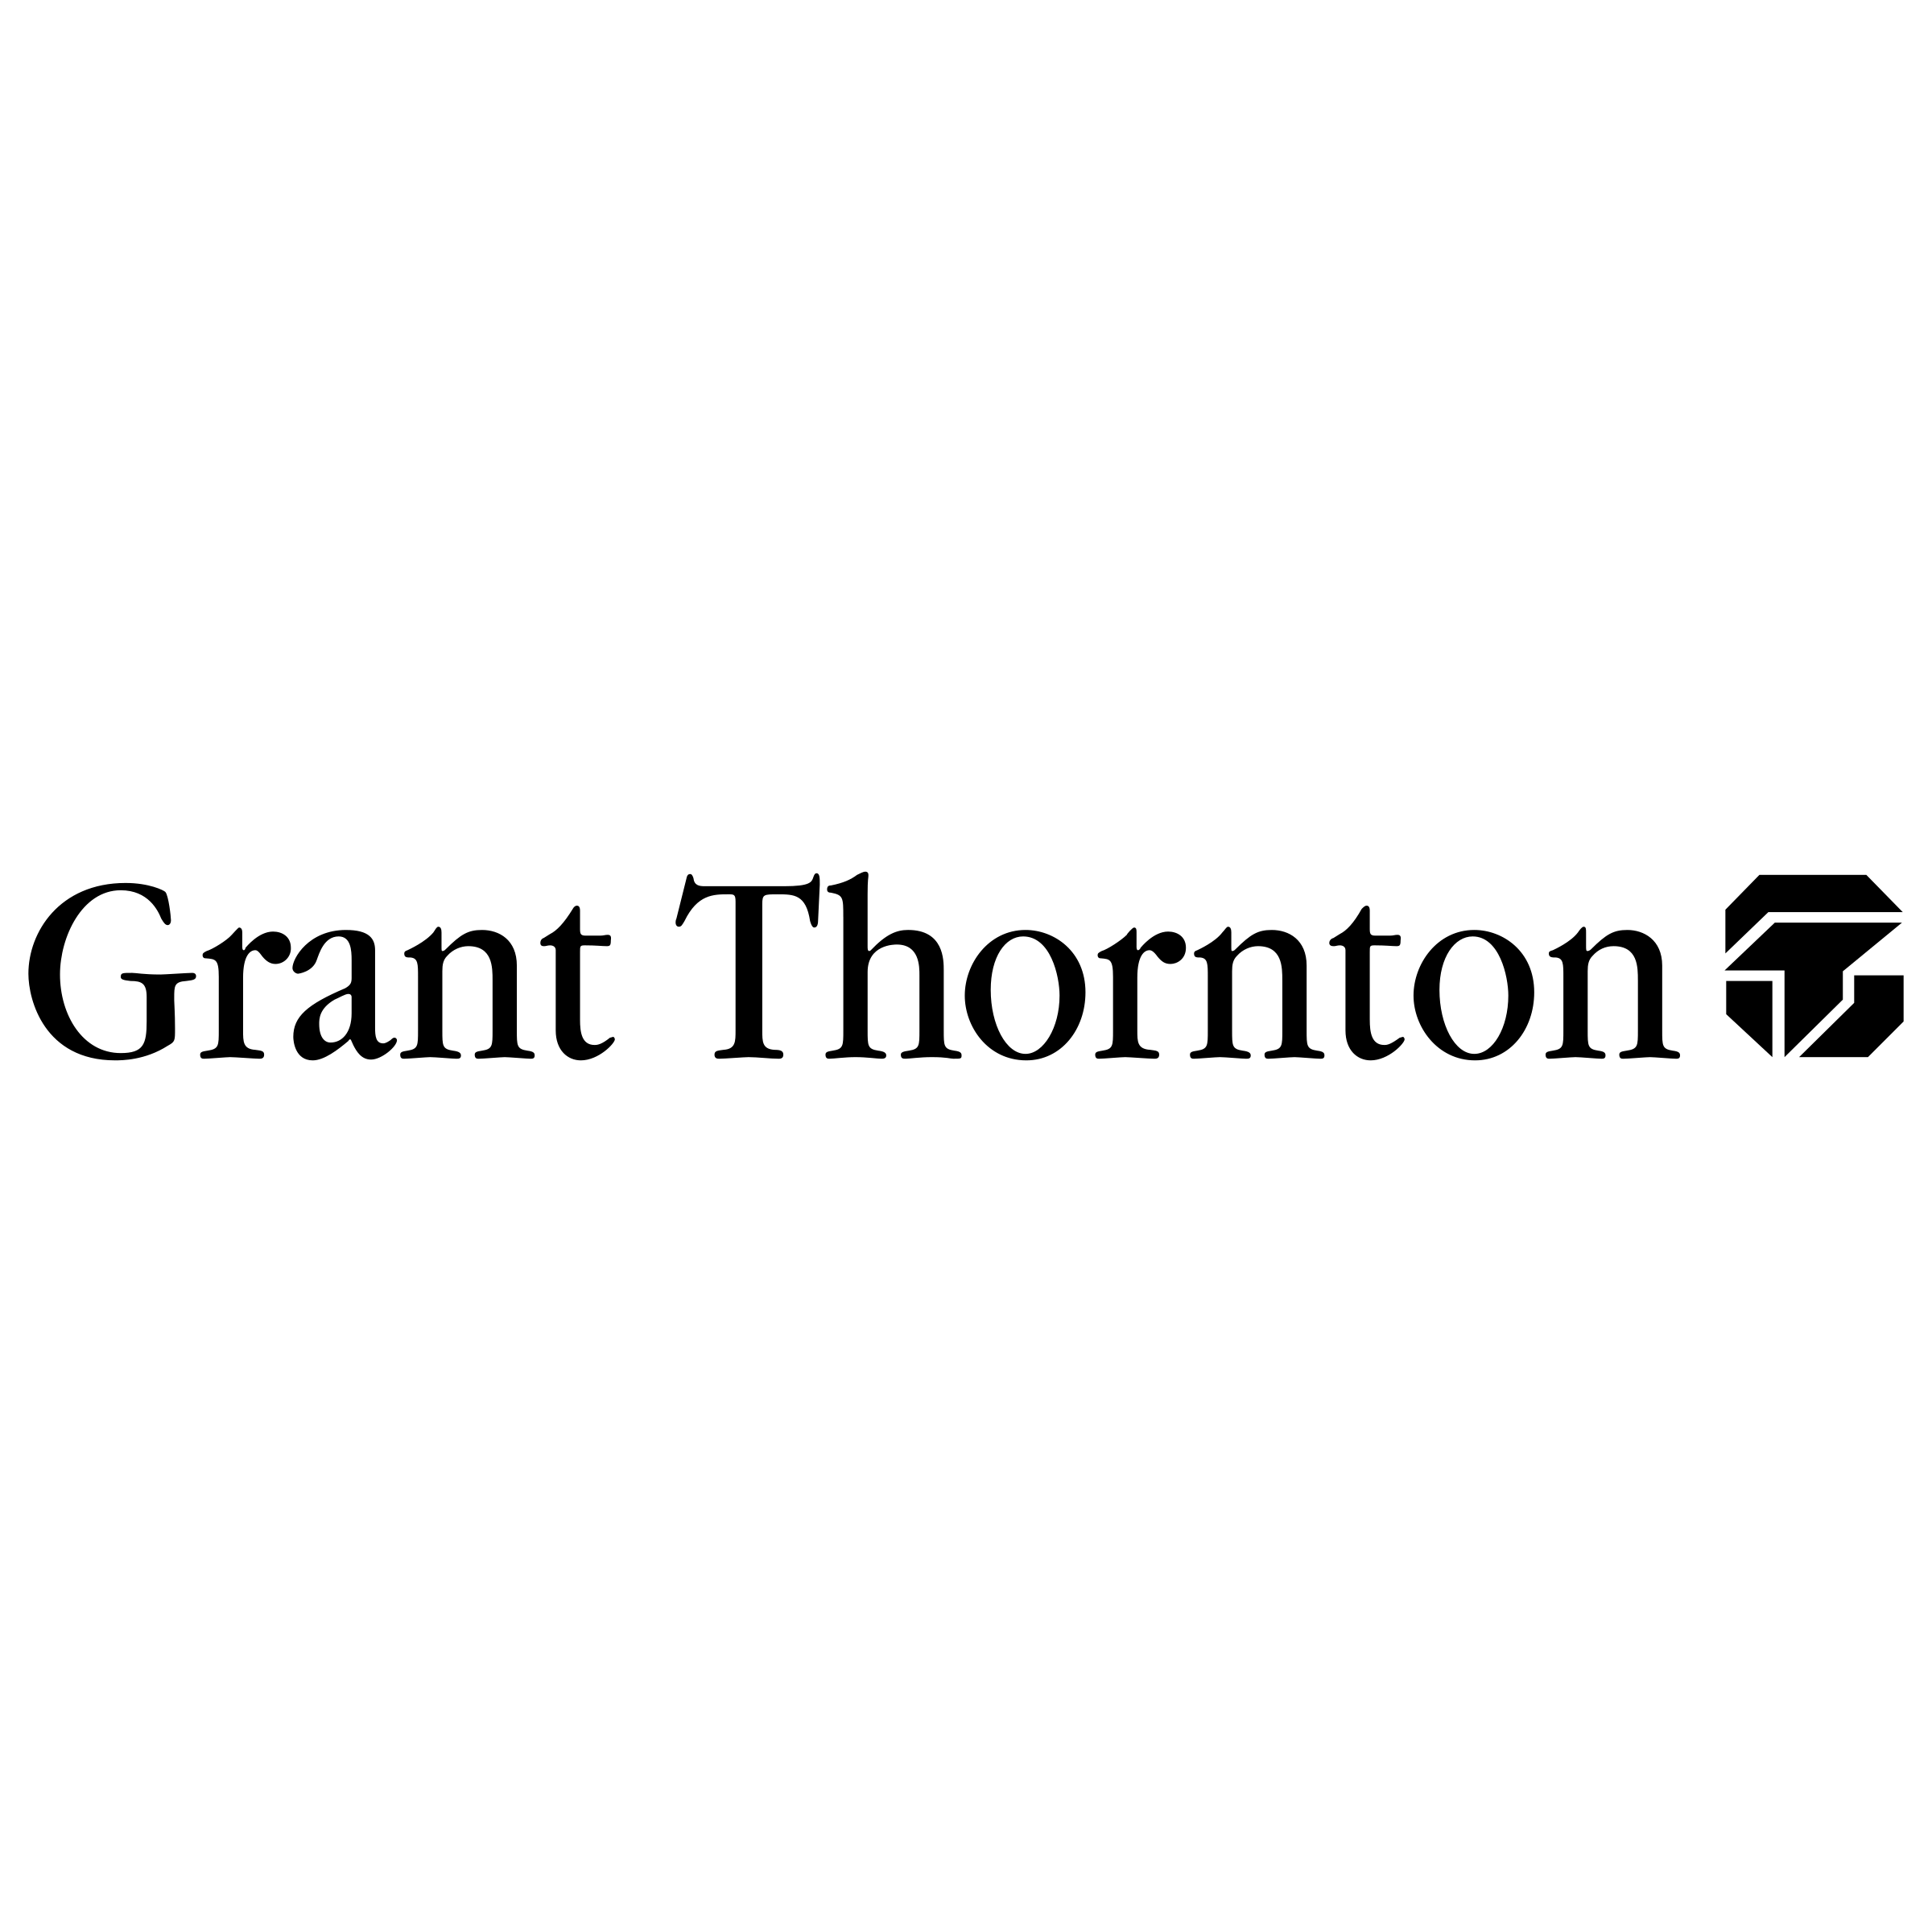 Grant Thornton Logo - Grant Thornton Logo PNG Transparent & SVG Vector - Freebie Supply